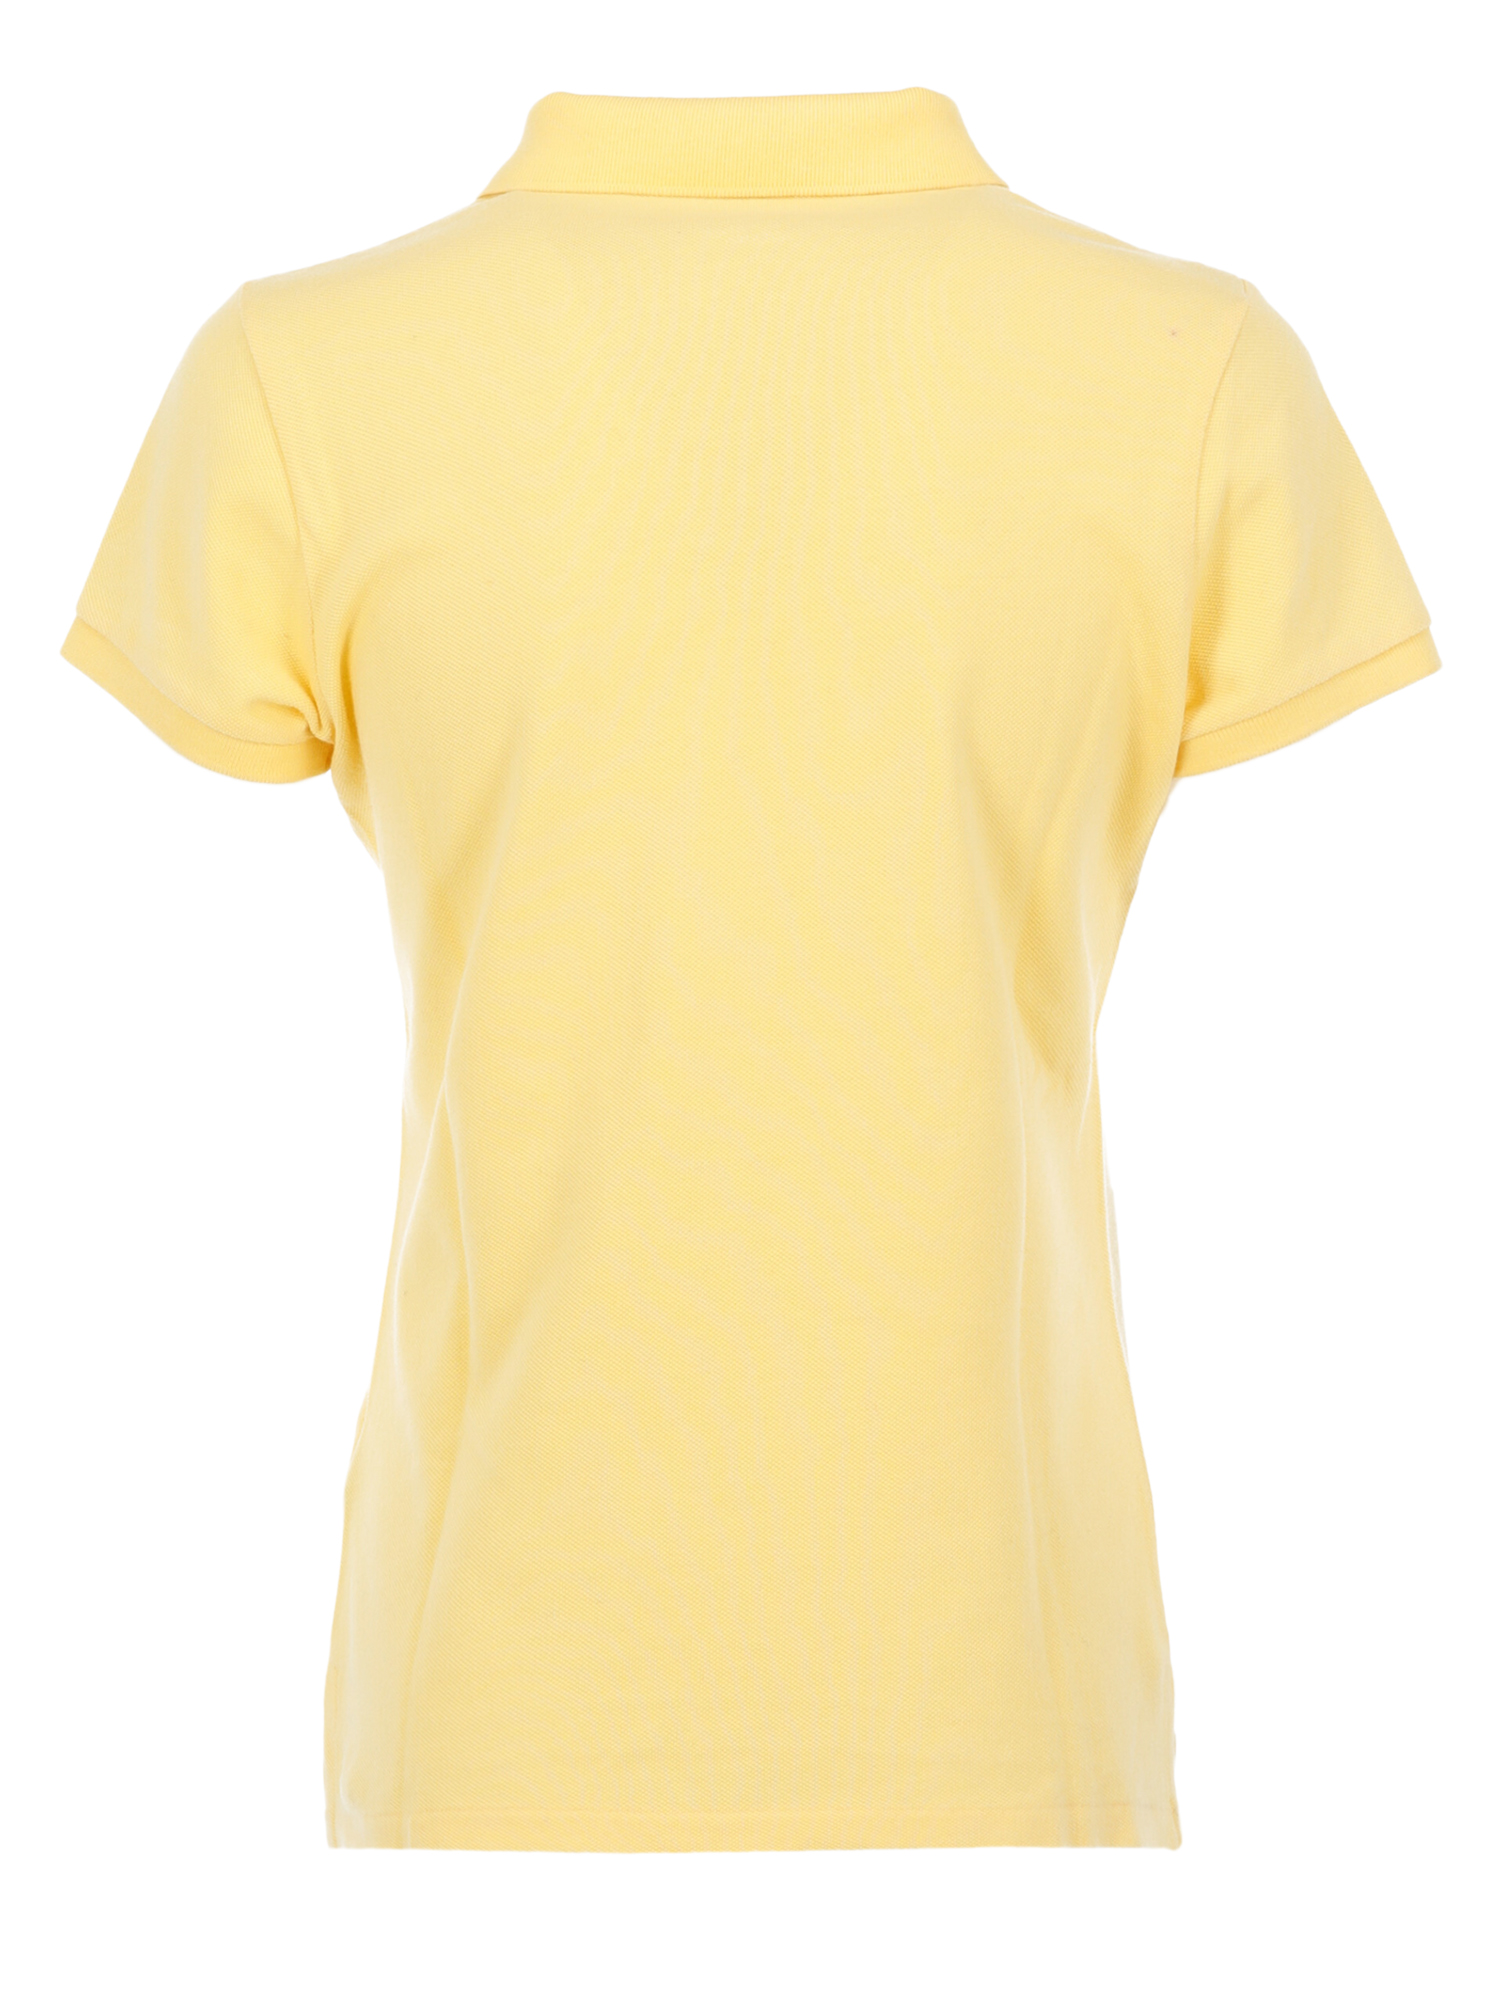 Ralph Lauren Special Price Women T-shirts and Top Yellow M | eBay